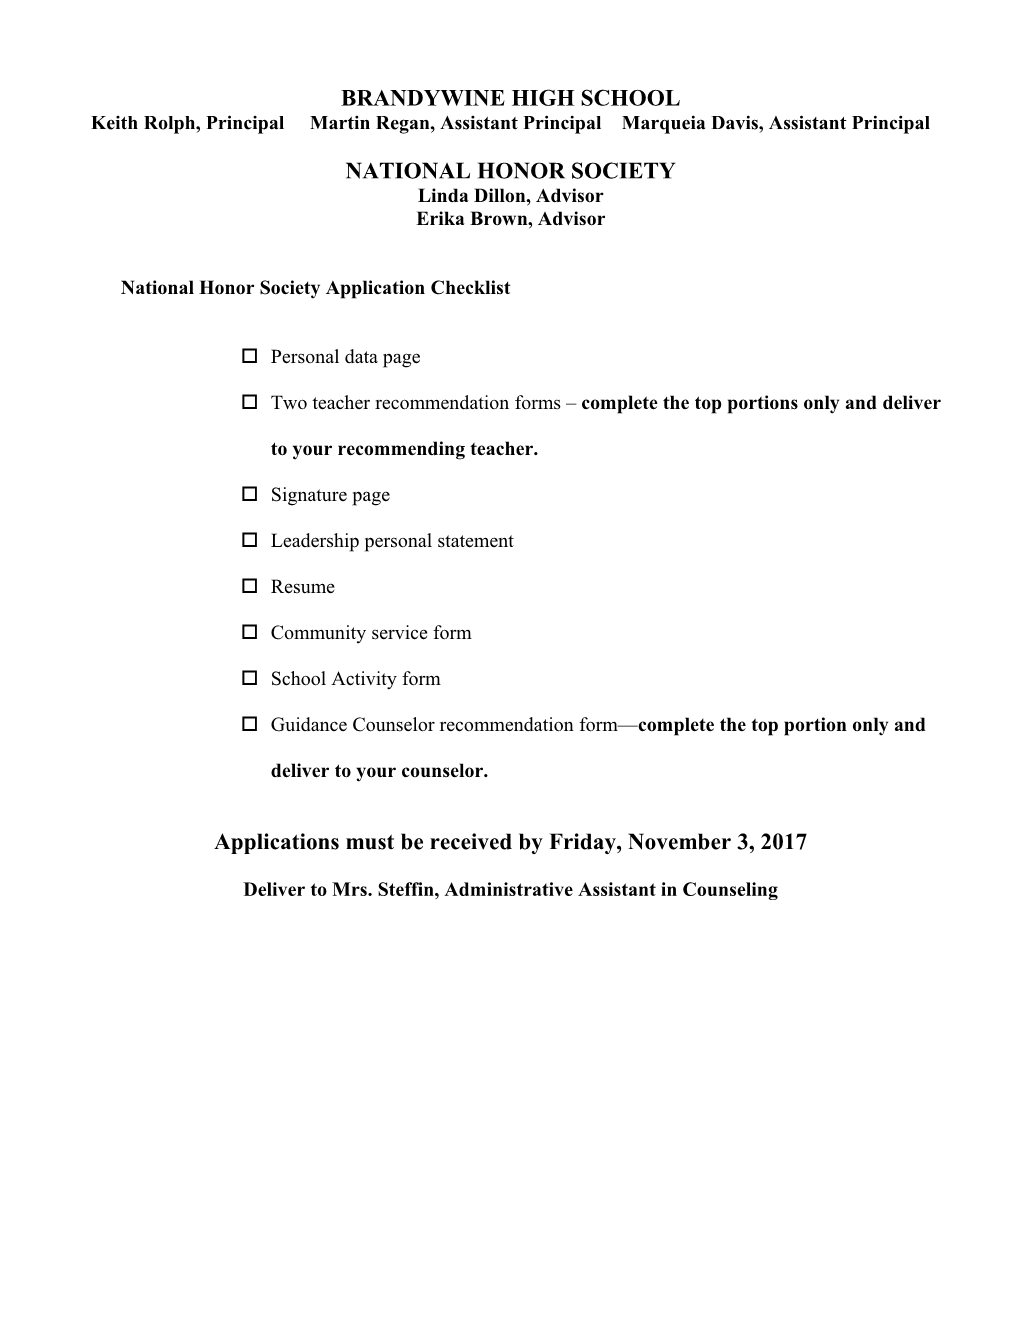 National Honor Society Application Form